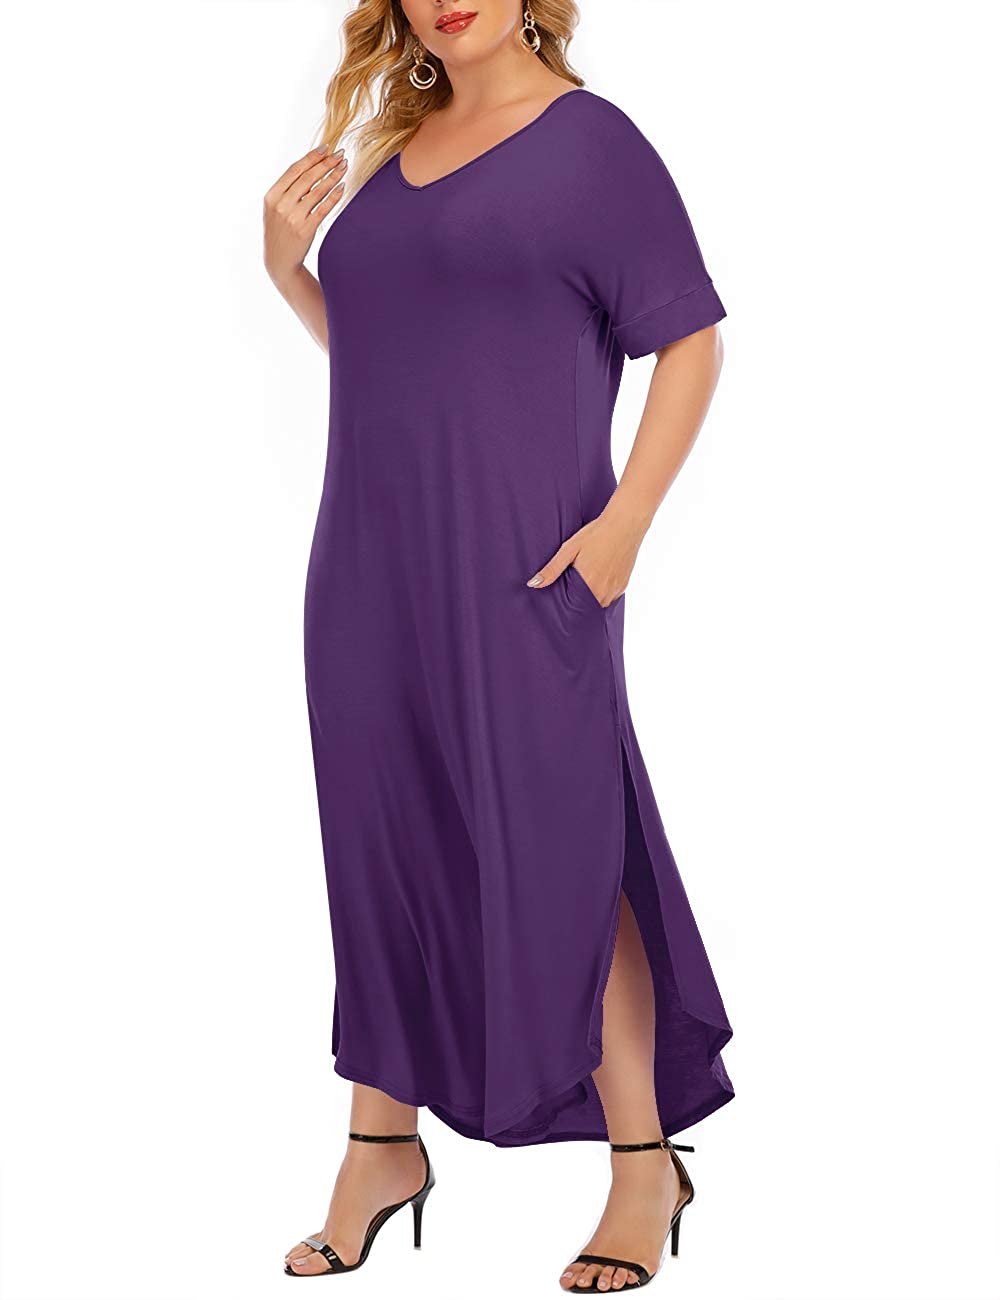 Womens Plus Size Evening Dress Solid Cold Shoulder Sundress Short-Sleeve Night Wear LYYZU Dresses Maxi Dress Casual Dress 